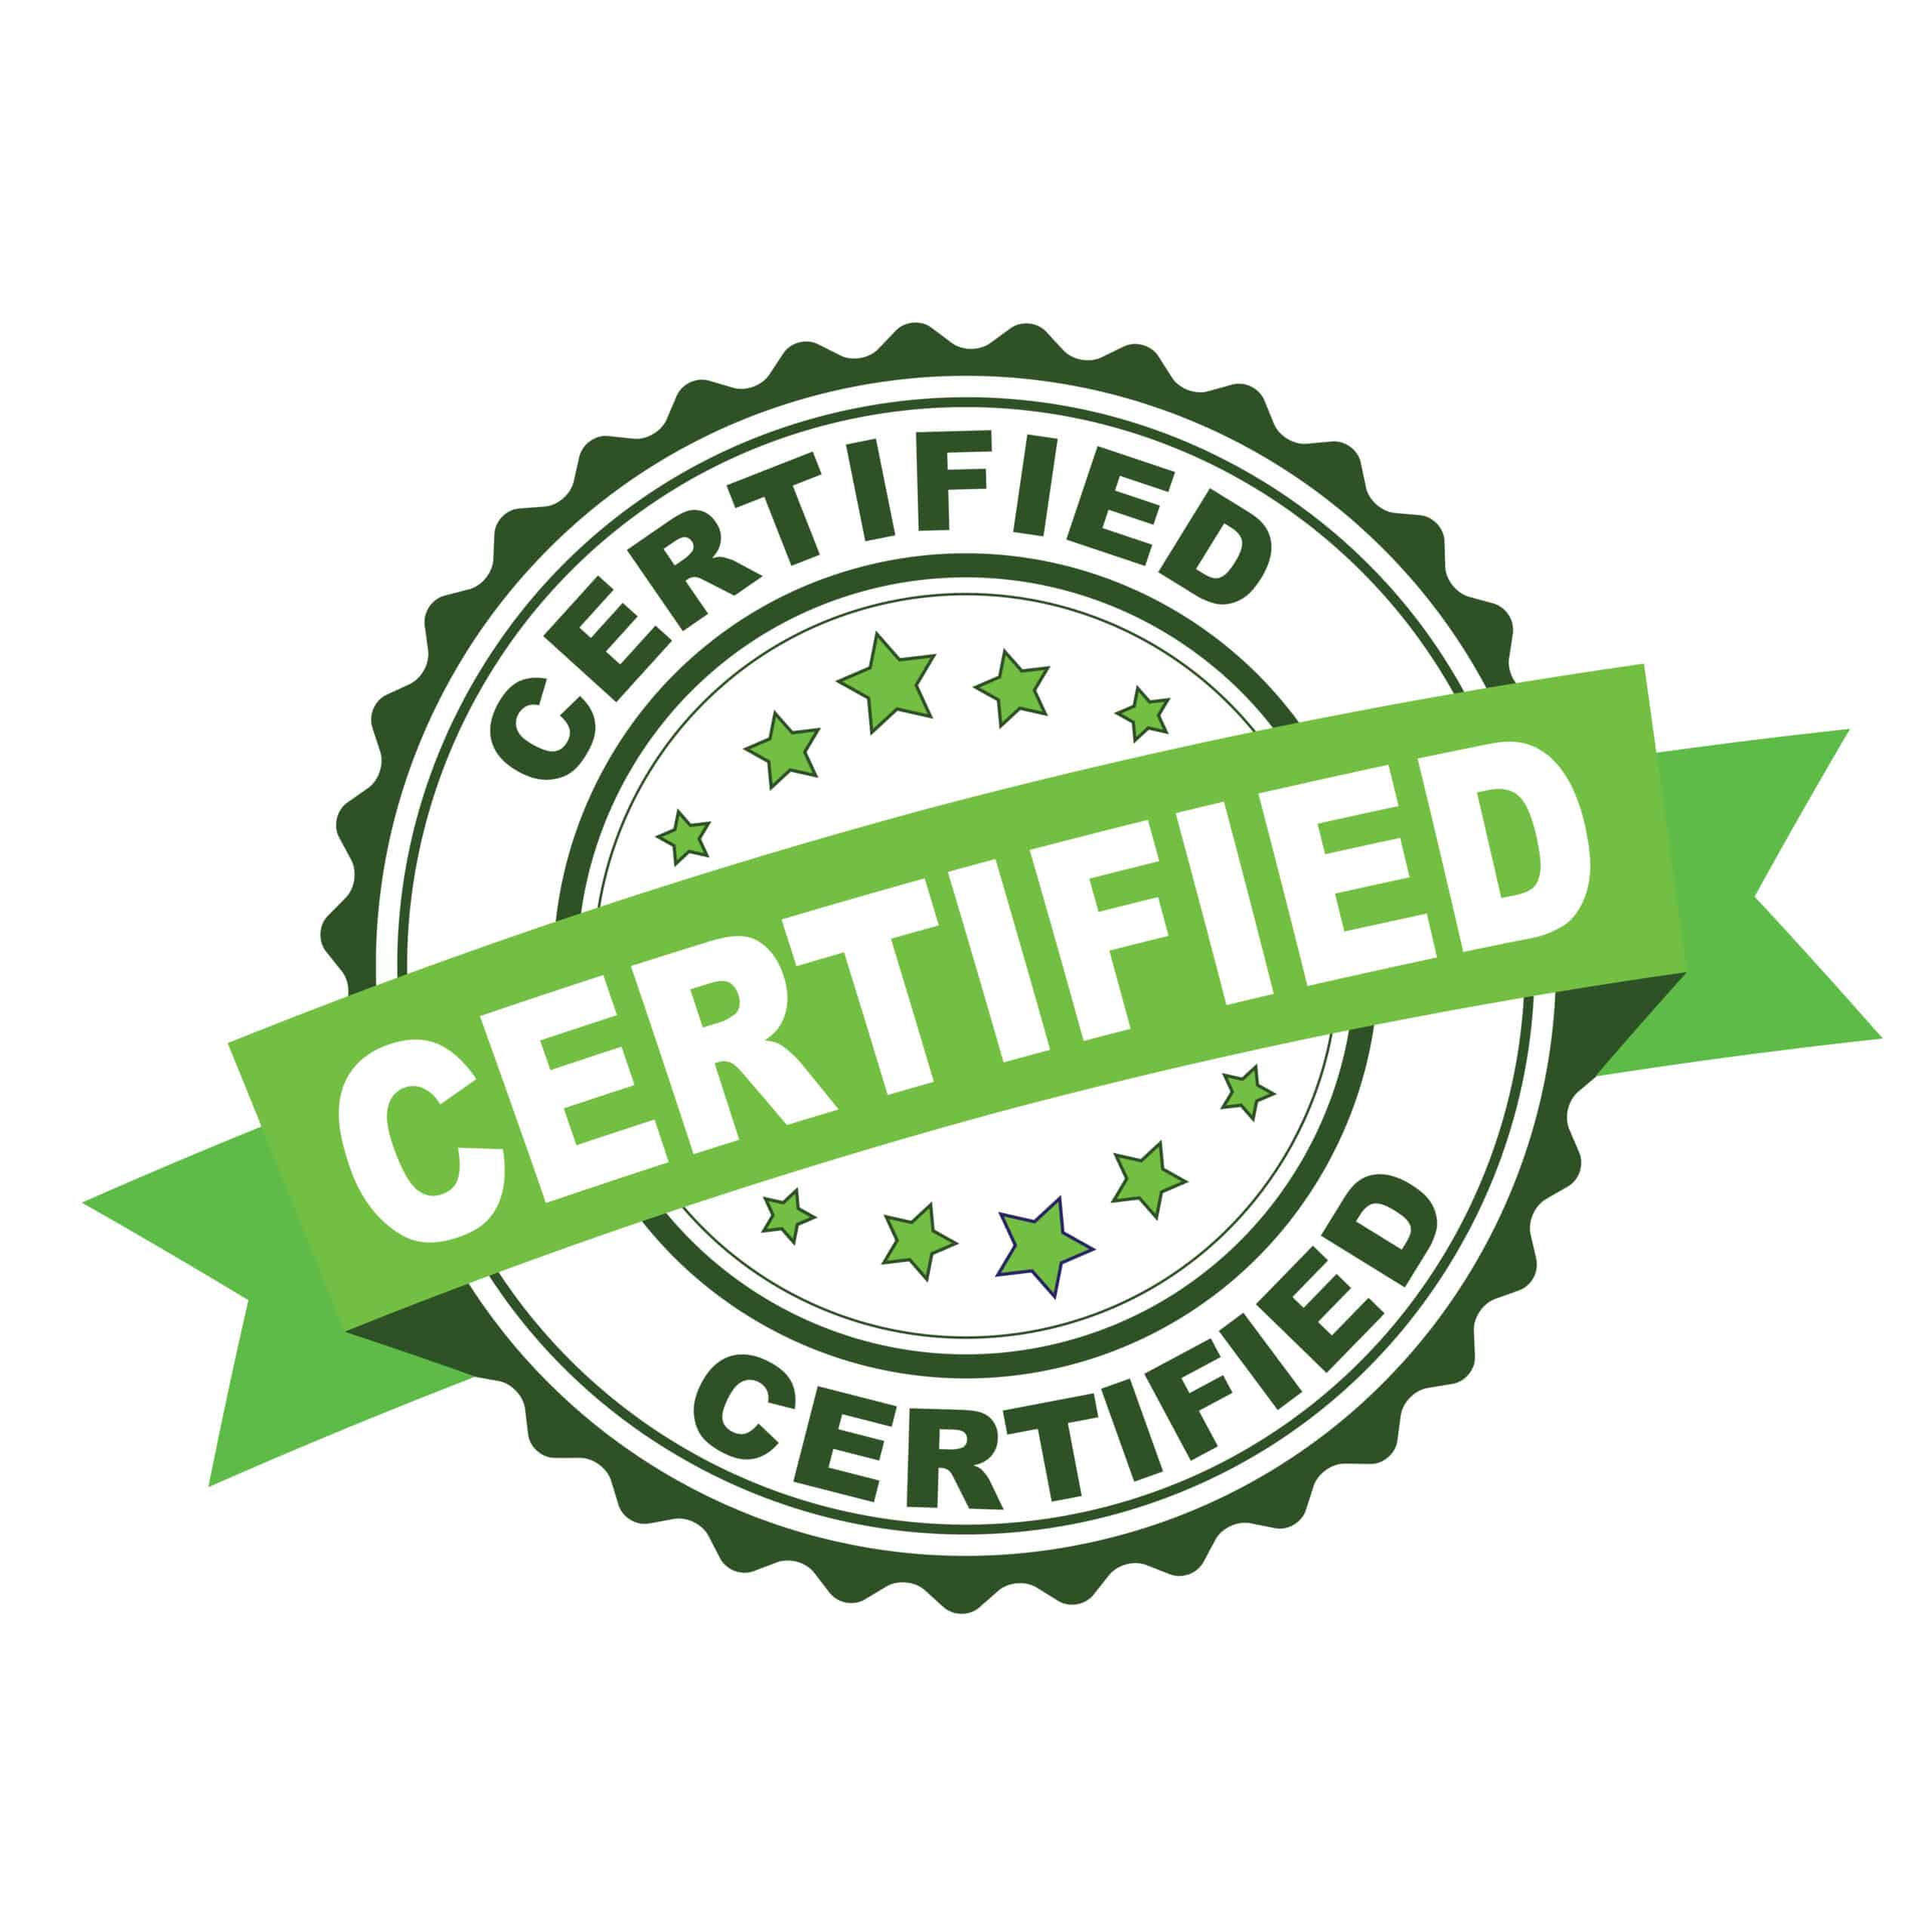 Certification, certificare, certified